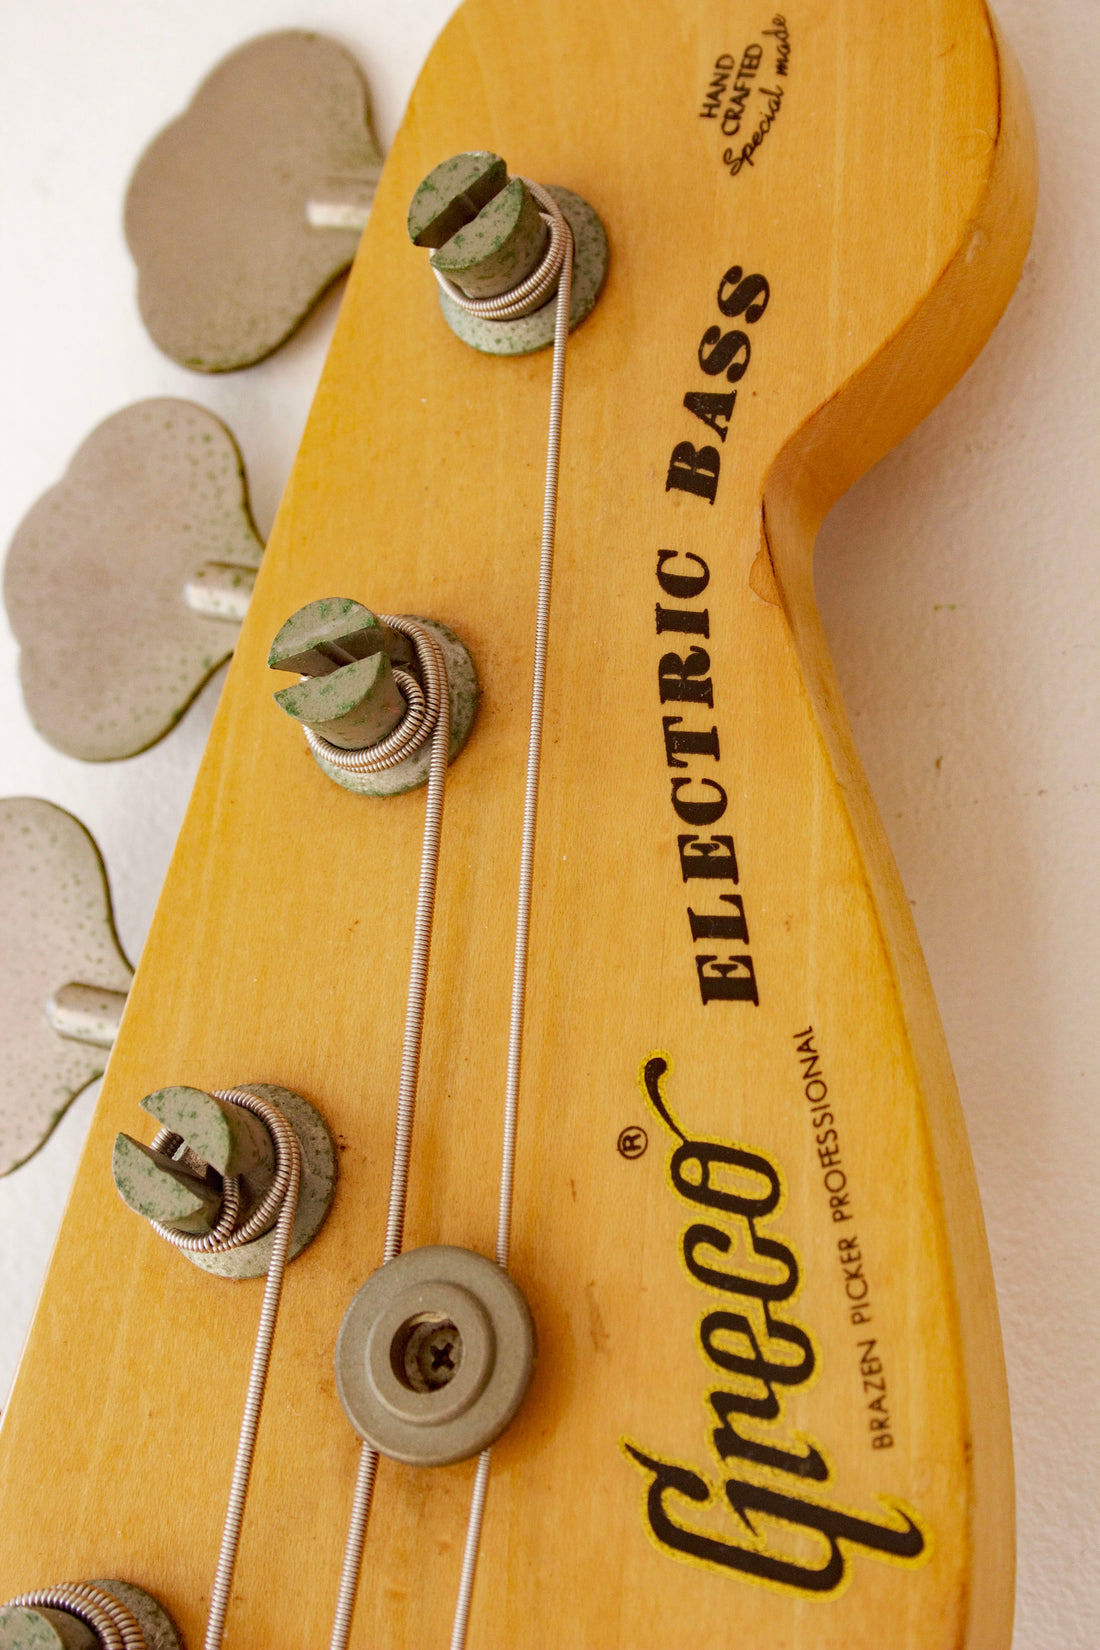 Greco Brazen Picker Bass Black 1977